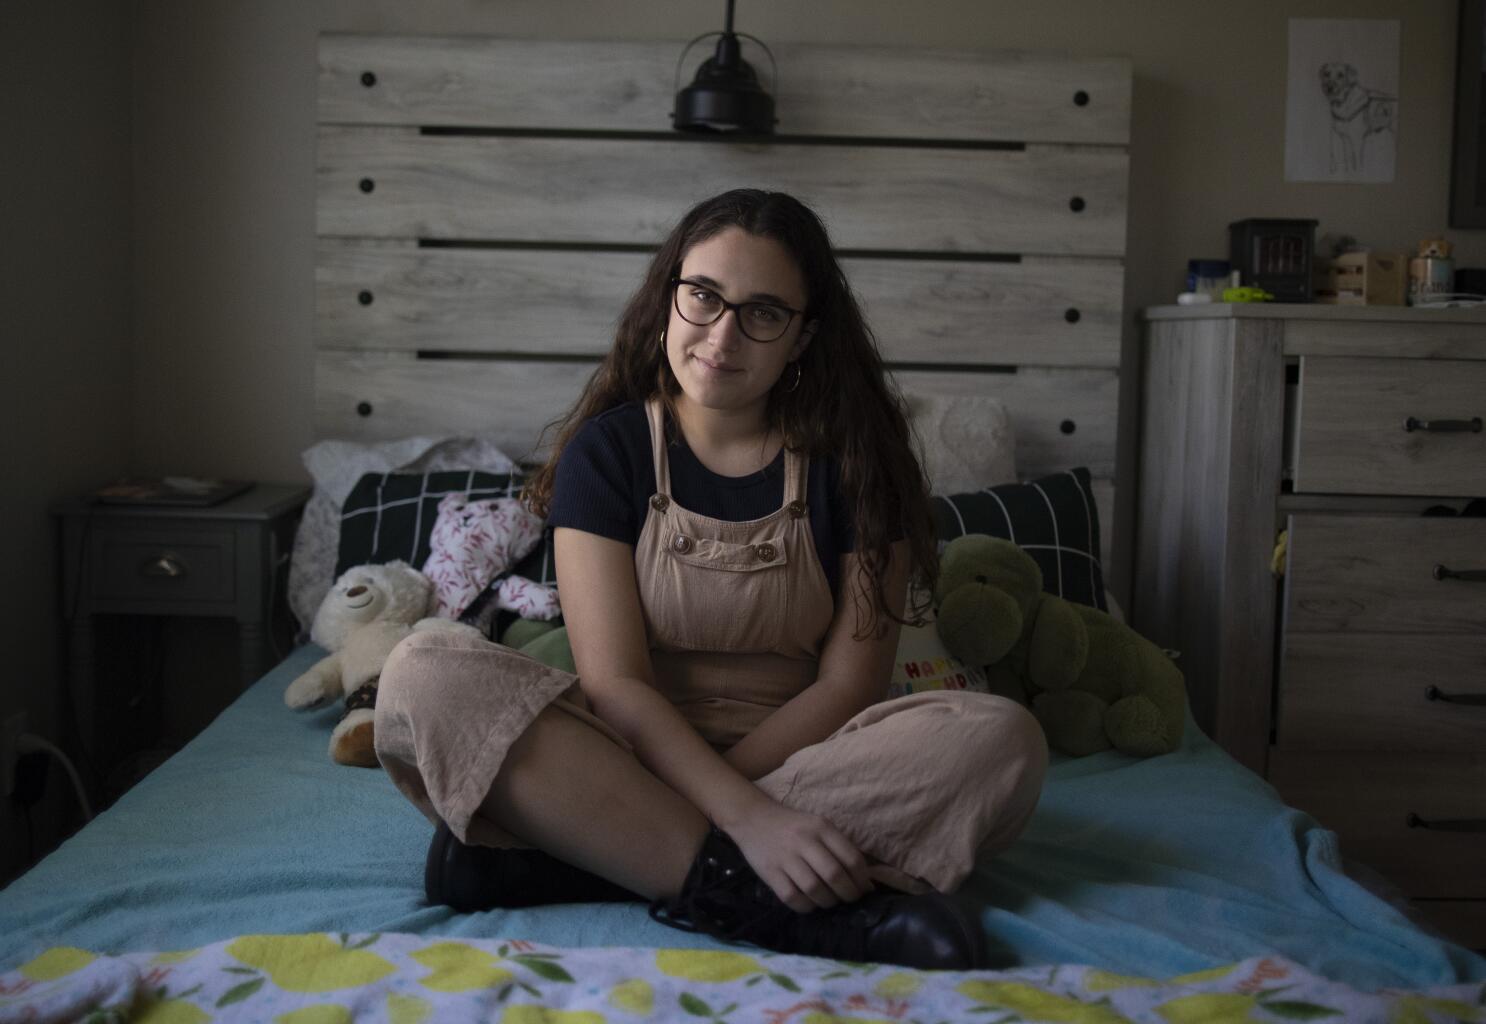 Teen gun violence survivor heals through activism - Los Angeles Times